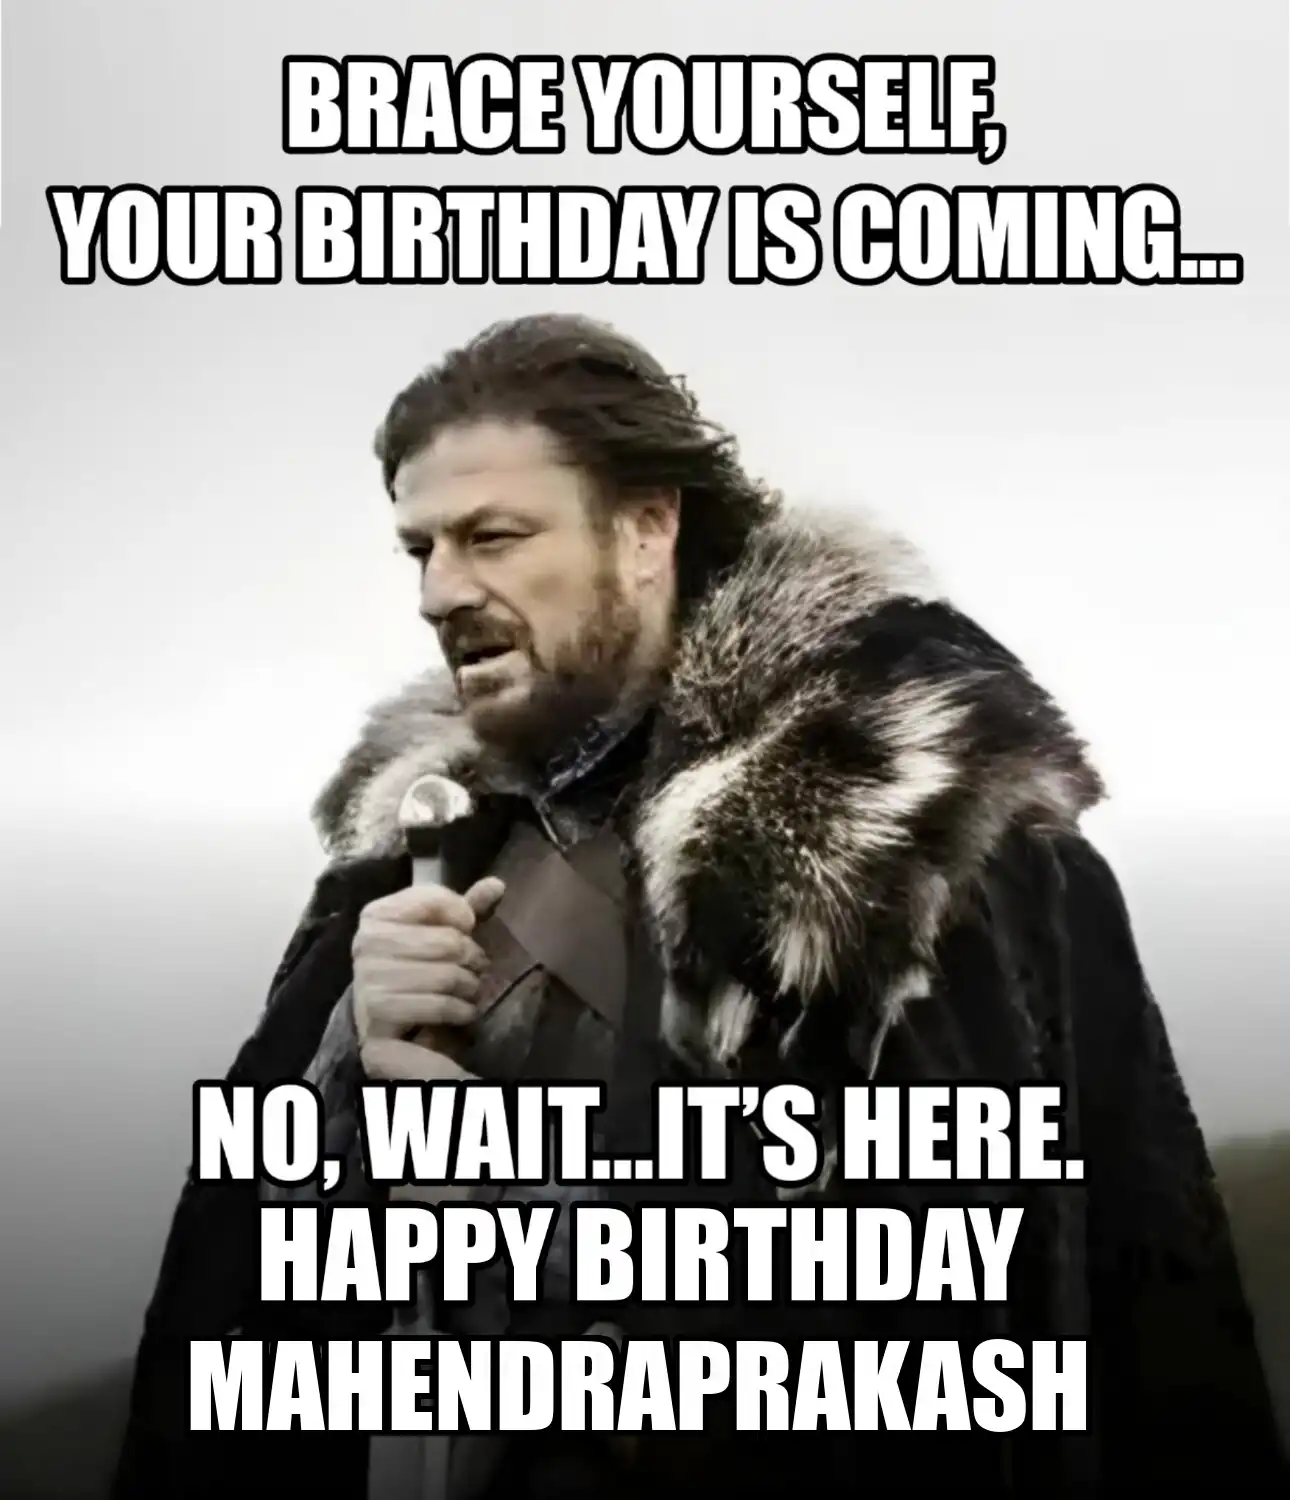 Happy Birthday Mahendraprakash Brace Yourself Your Birthday Is Coming Meme